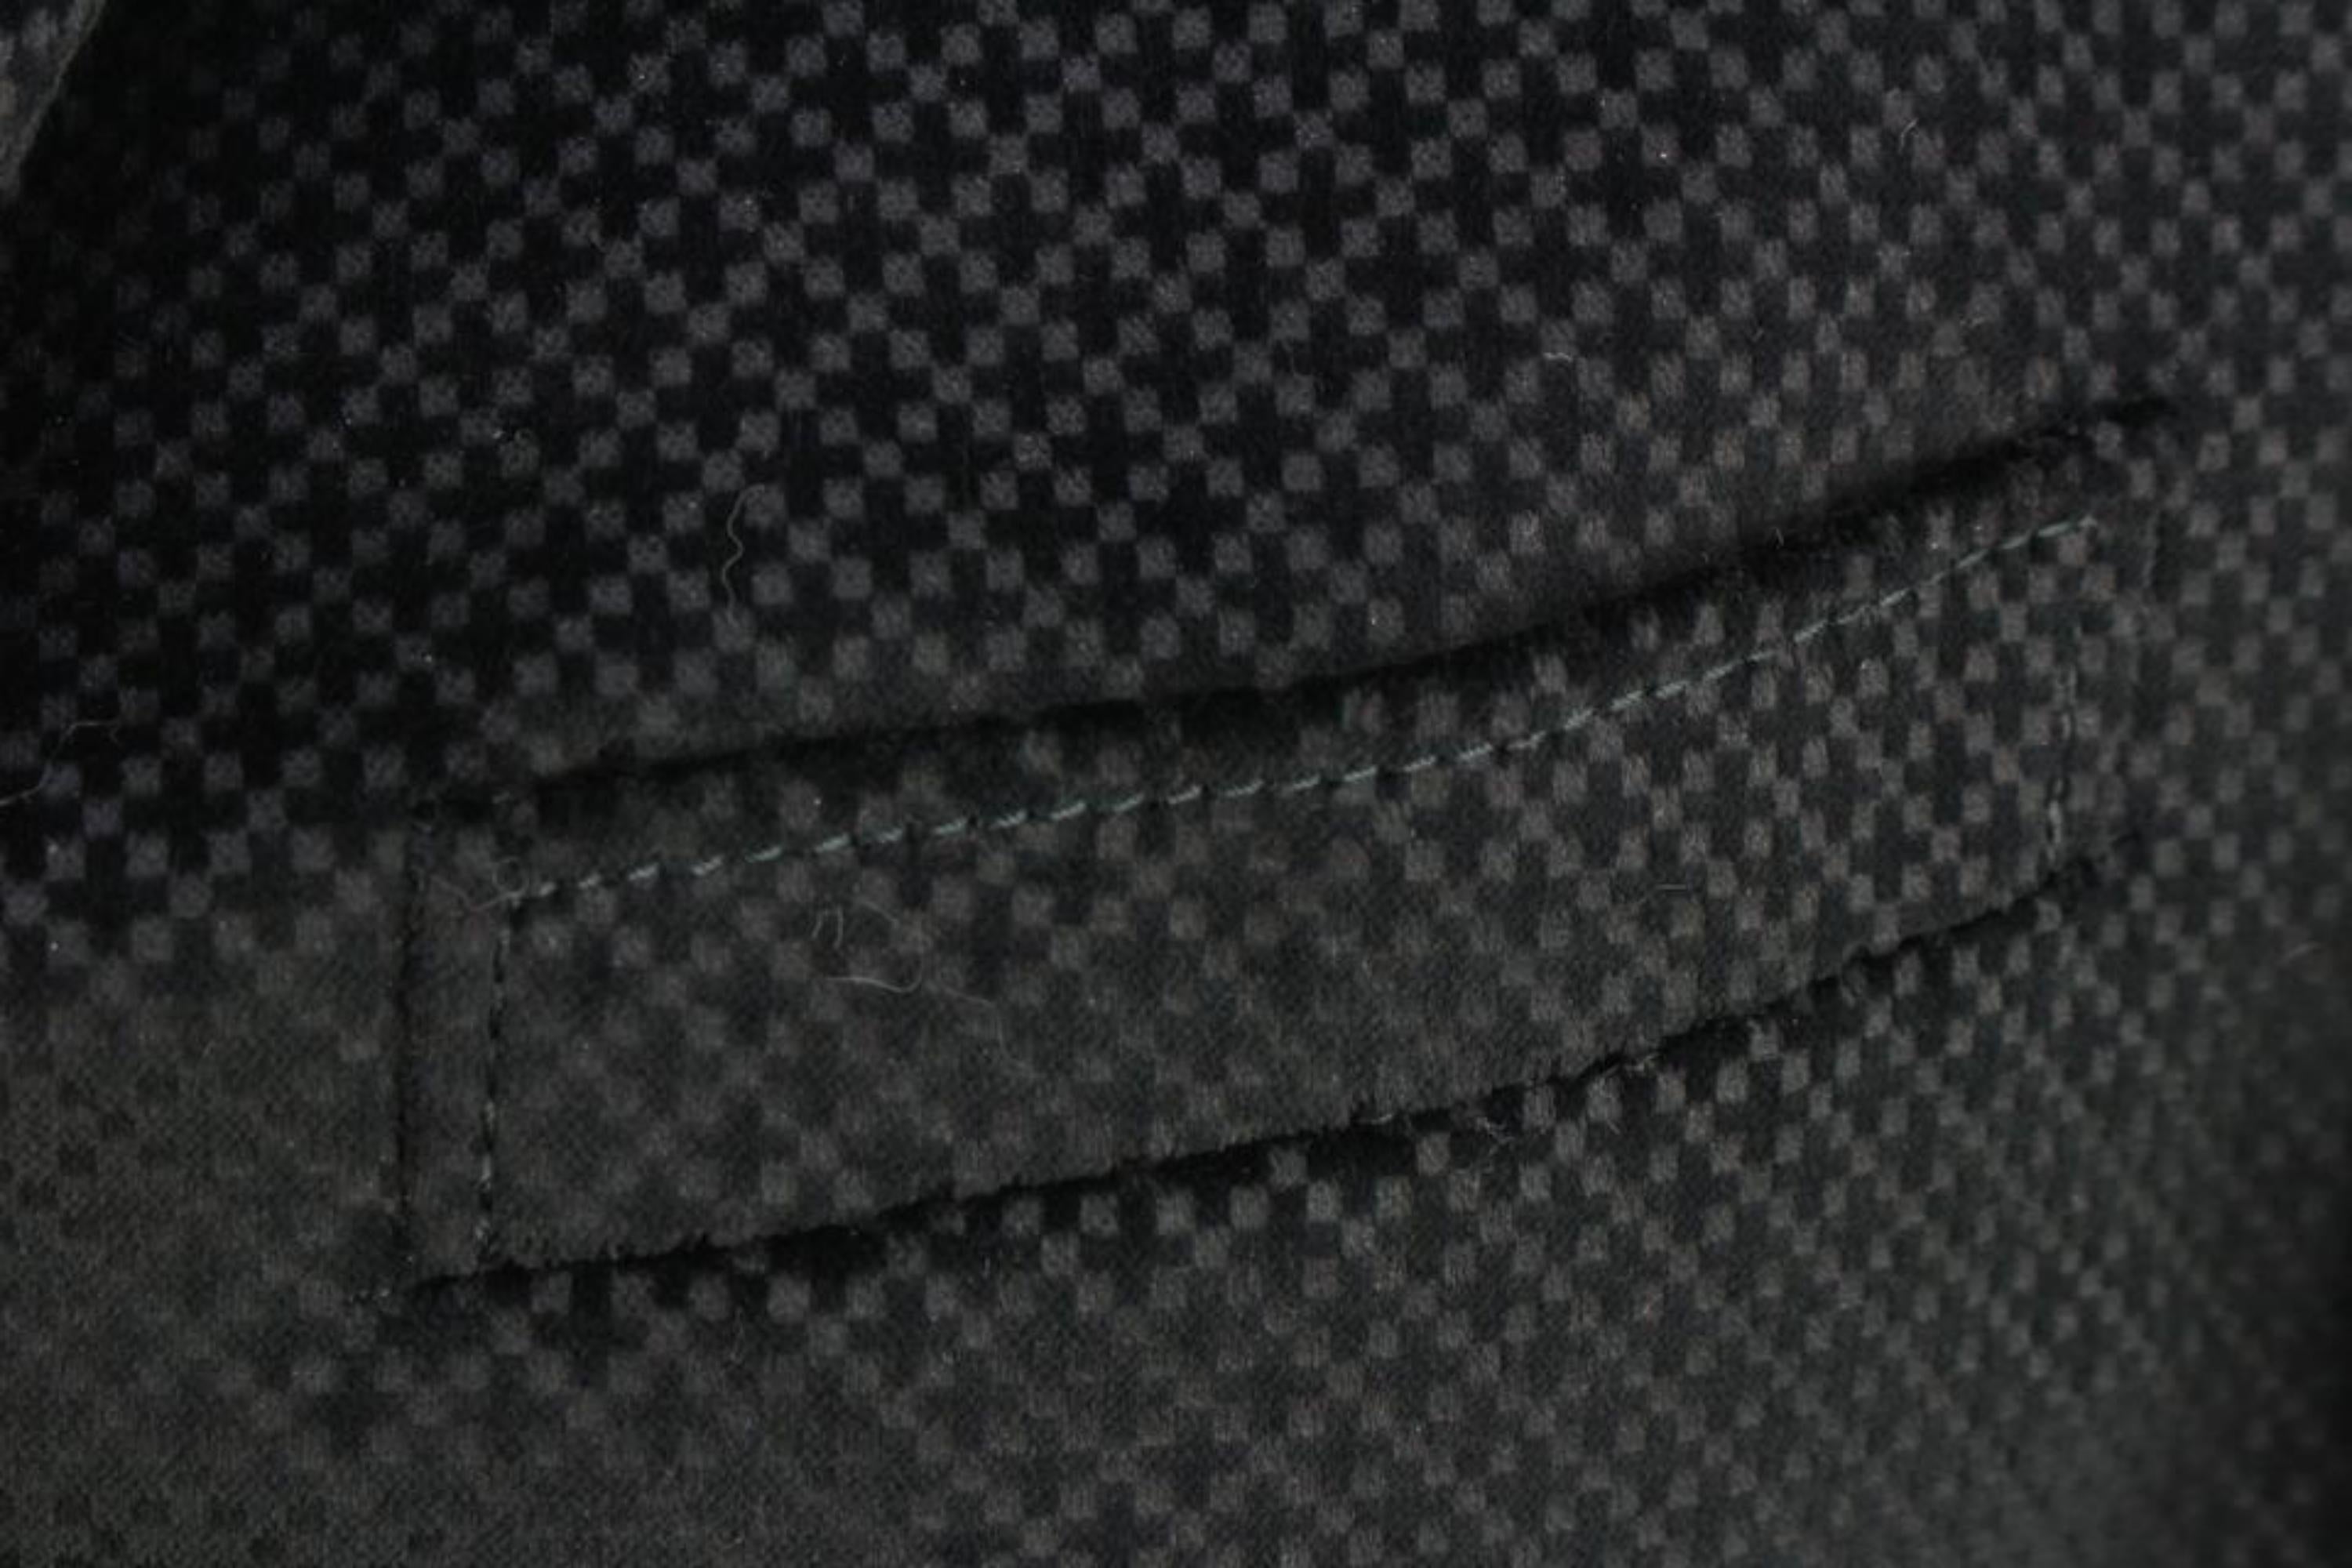 Gucci Men's Large Black Diamante Velvet Formal Smoking Jacket 125g27 For Sale 6